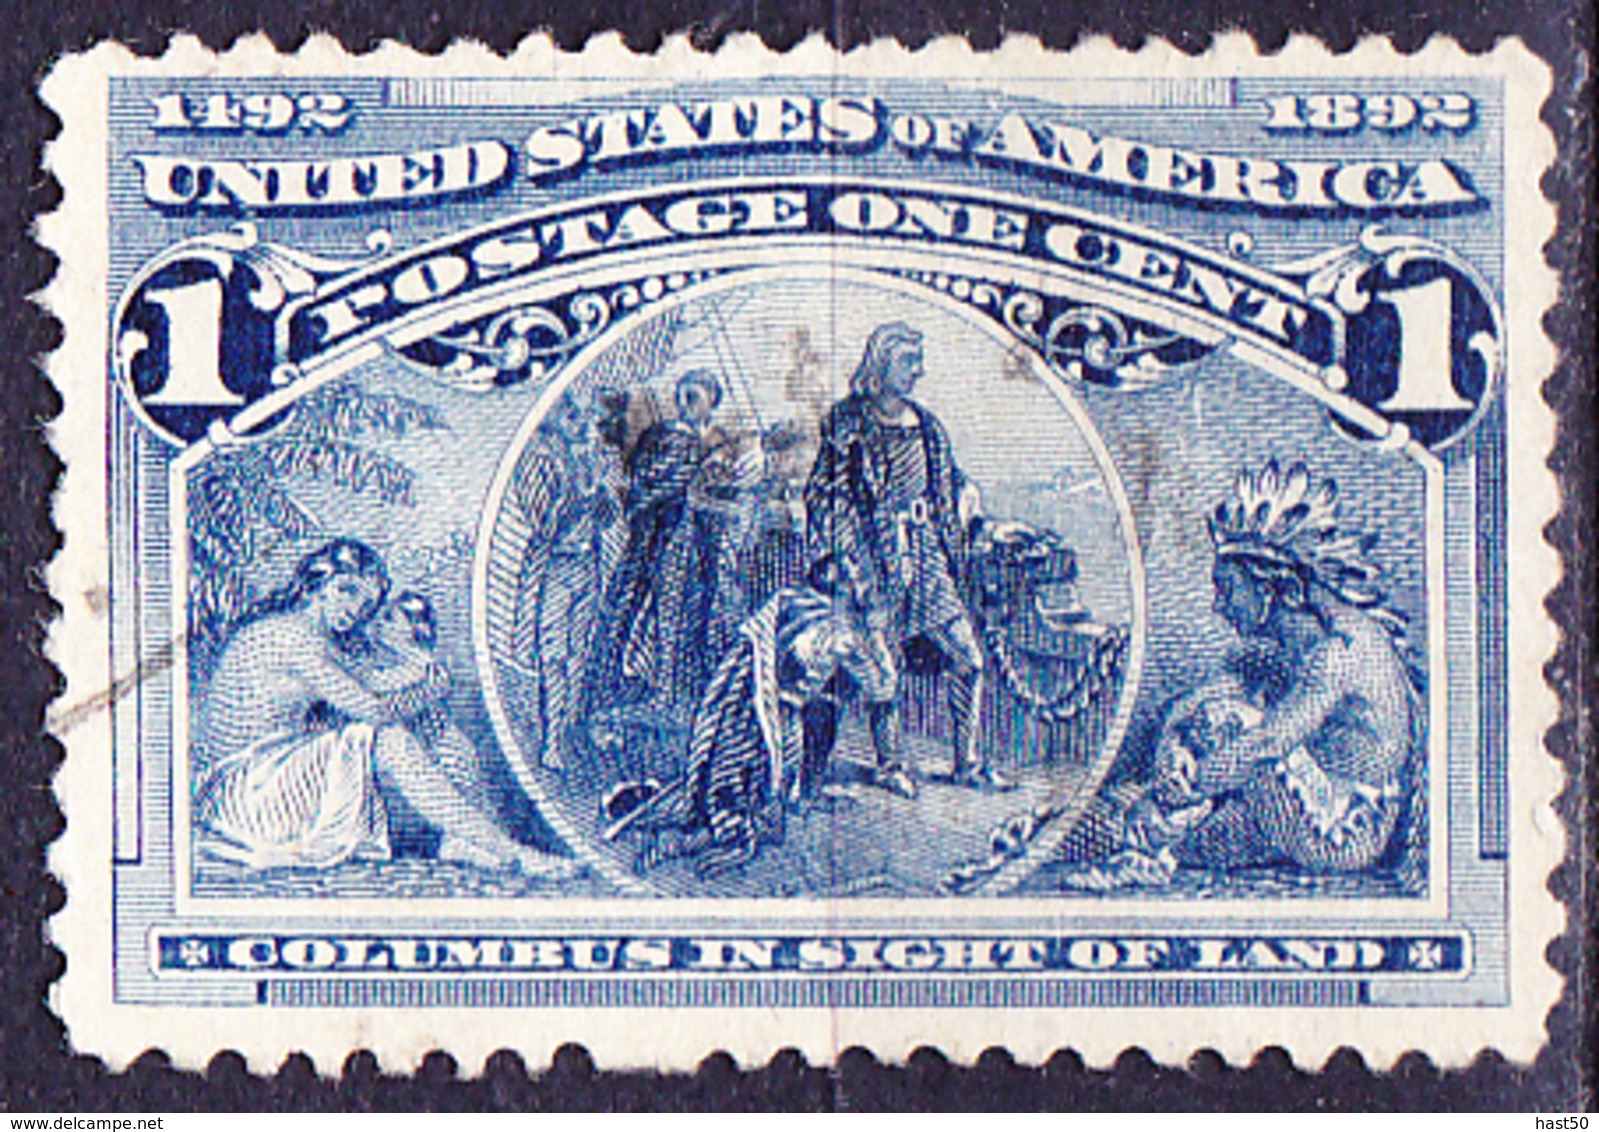 USA - Kolumbus Sichtet Land, Indianerfamilie (MiNr: 73) 1893 - Gest Used Obl - Used Stamps